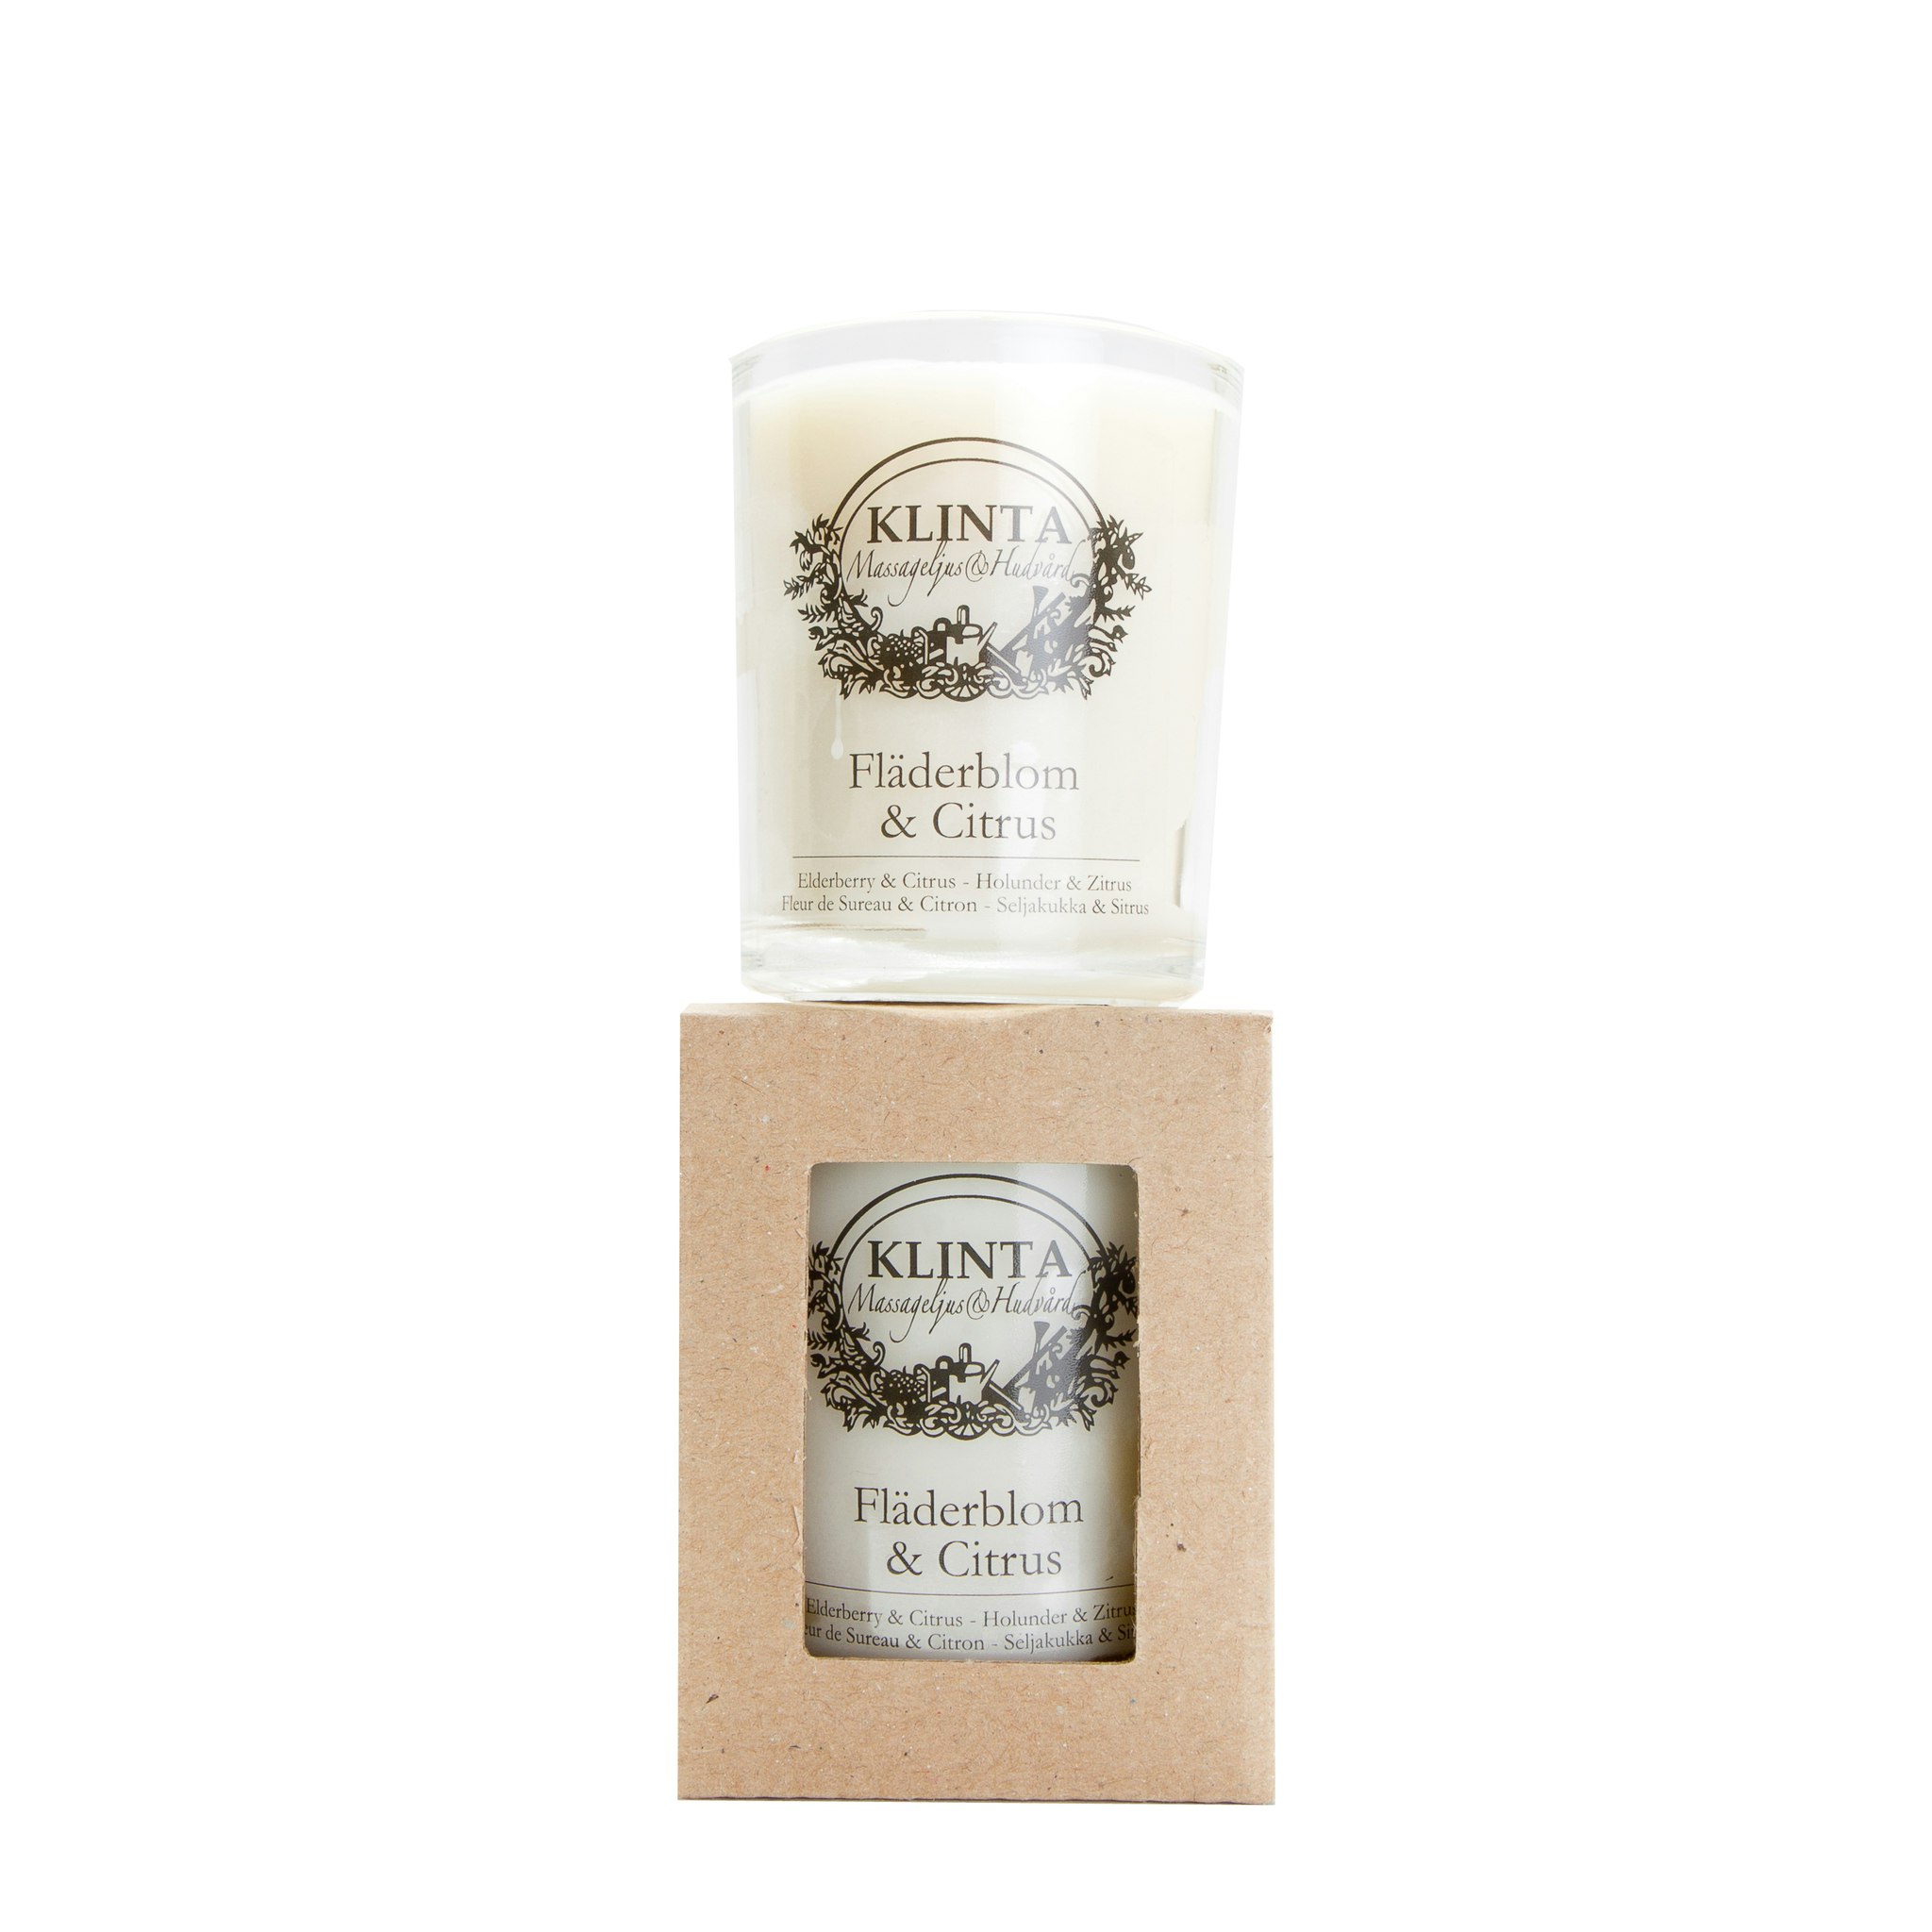 Scent and massage candle - Elderflower & citrus